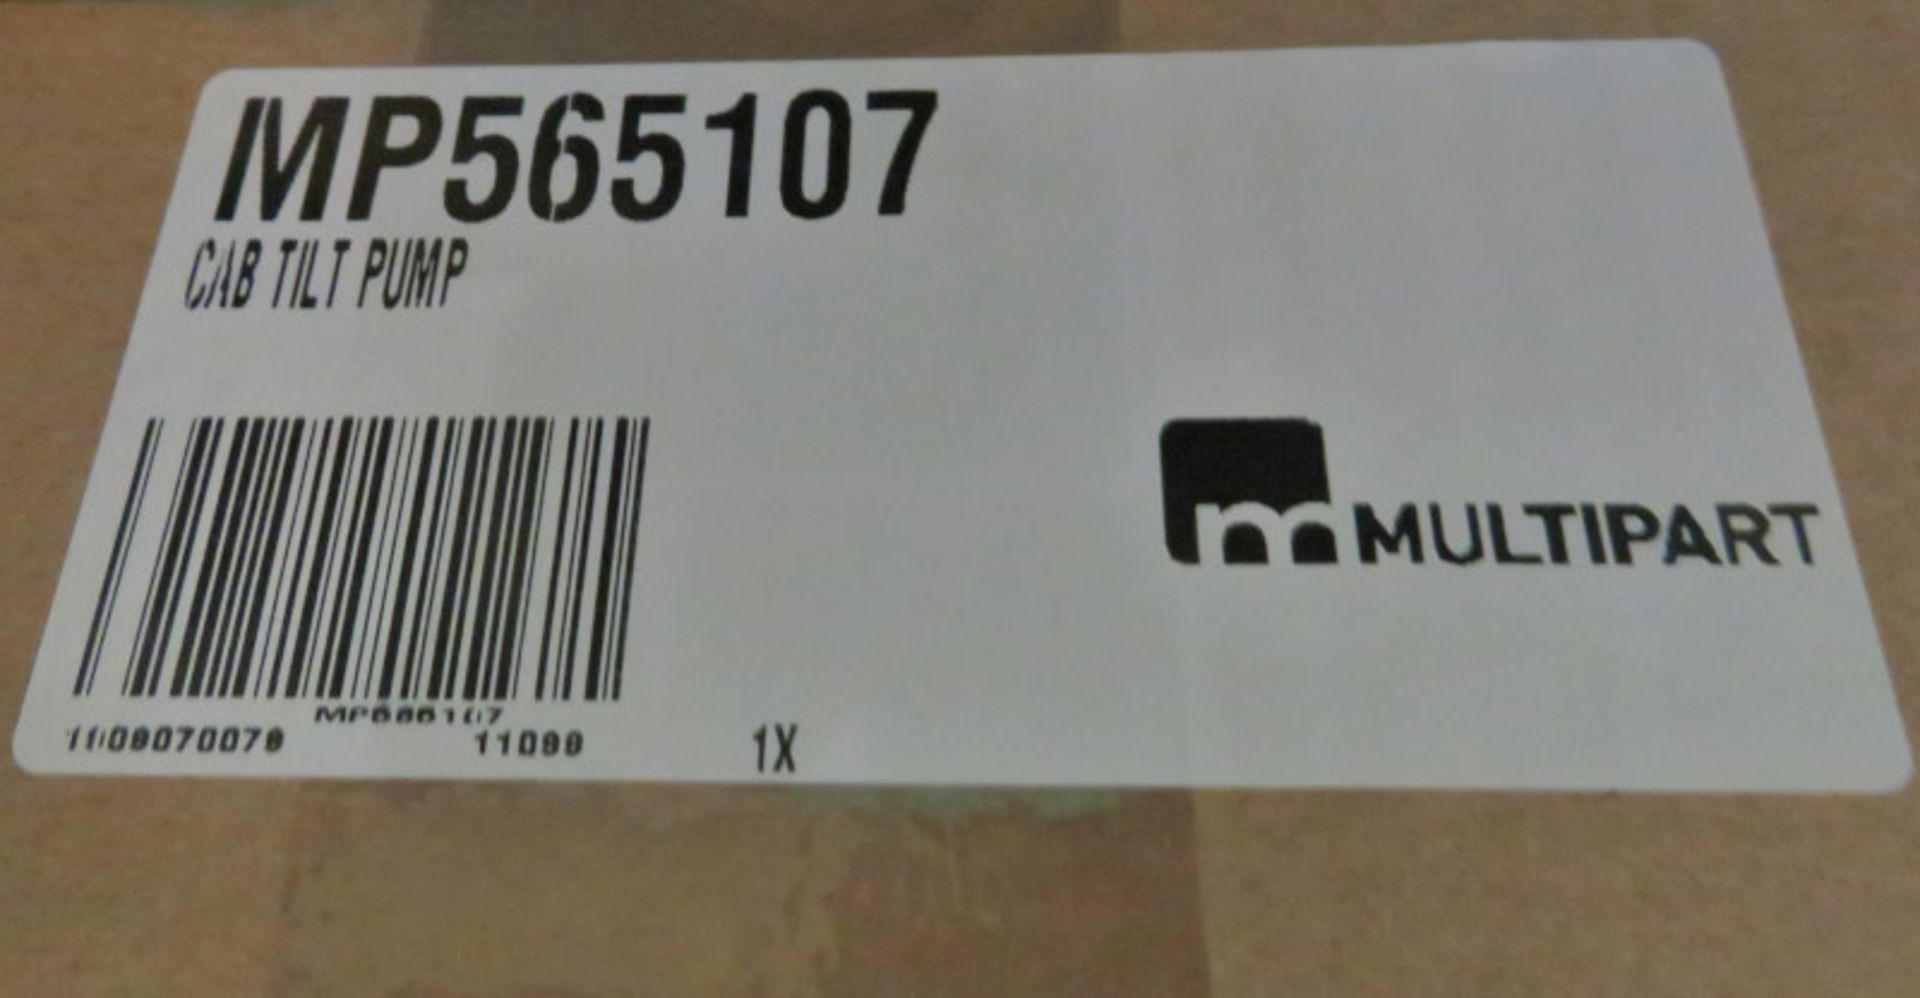 Multipart MP565107 Cab Tilt Pump - Image 4 of 4